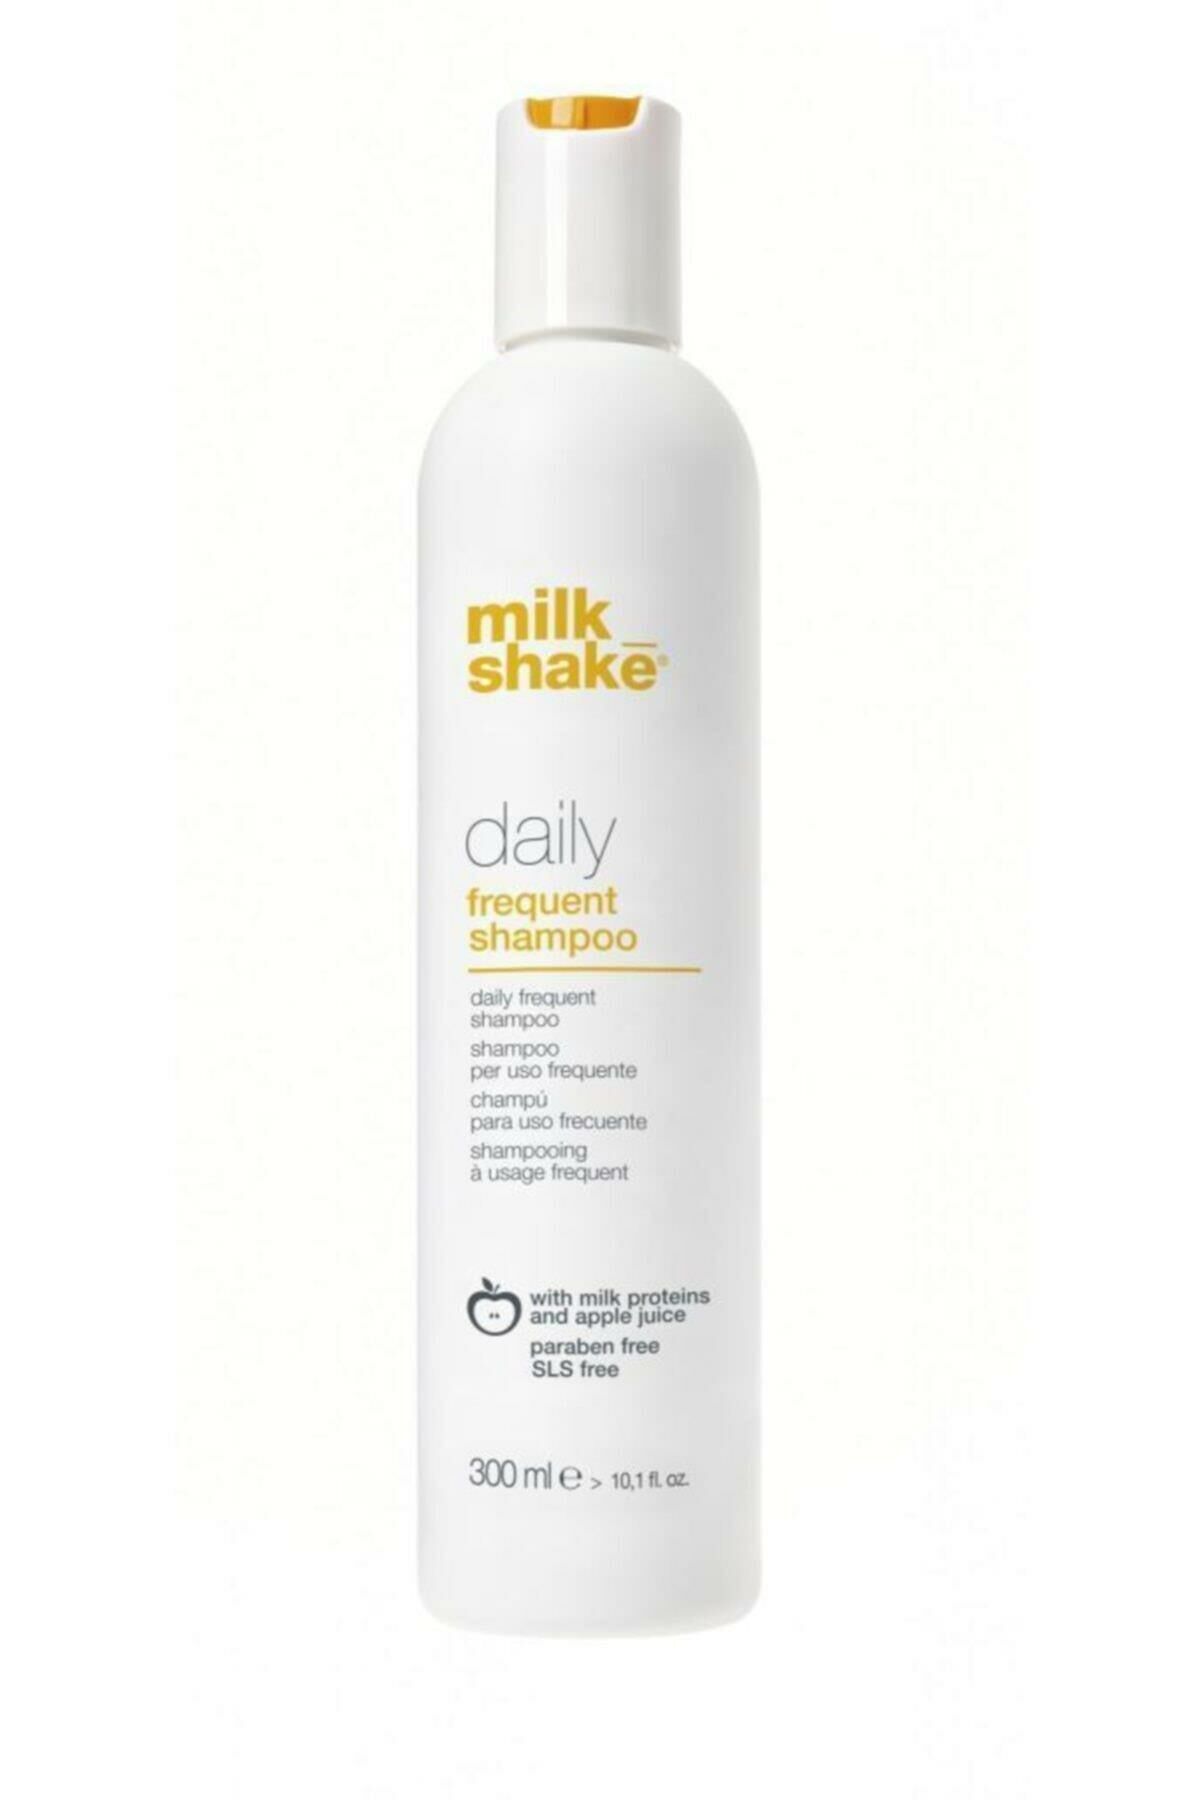 Milkshake Daily Frequent Shampoo 300 ml-Günlük Şampuan